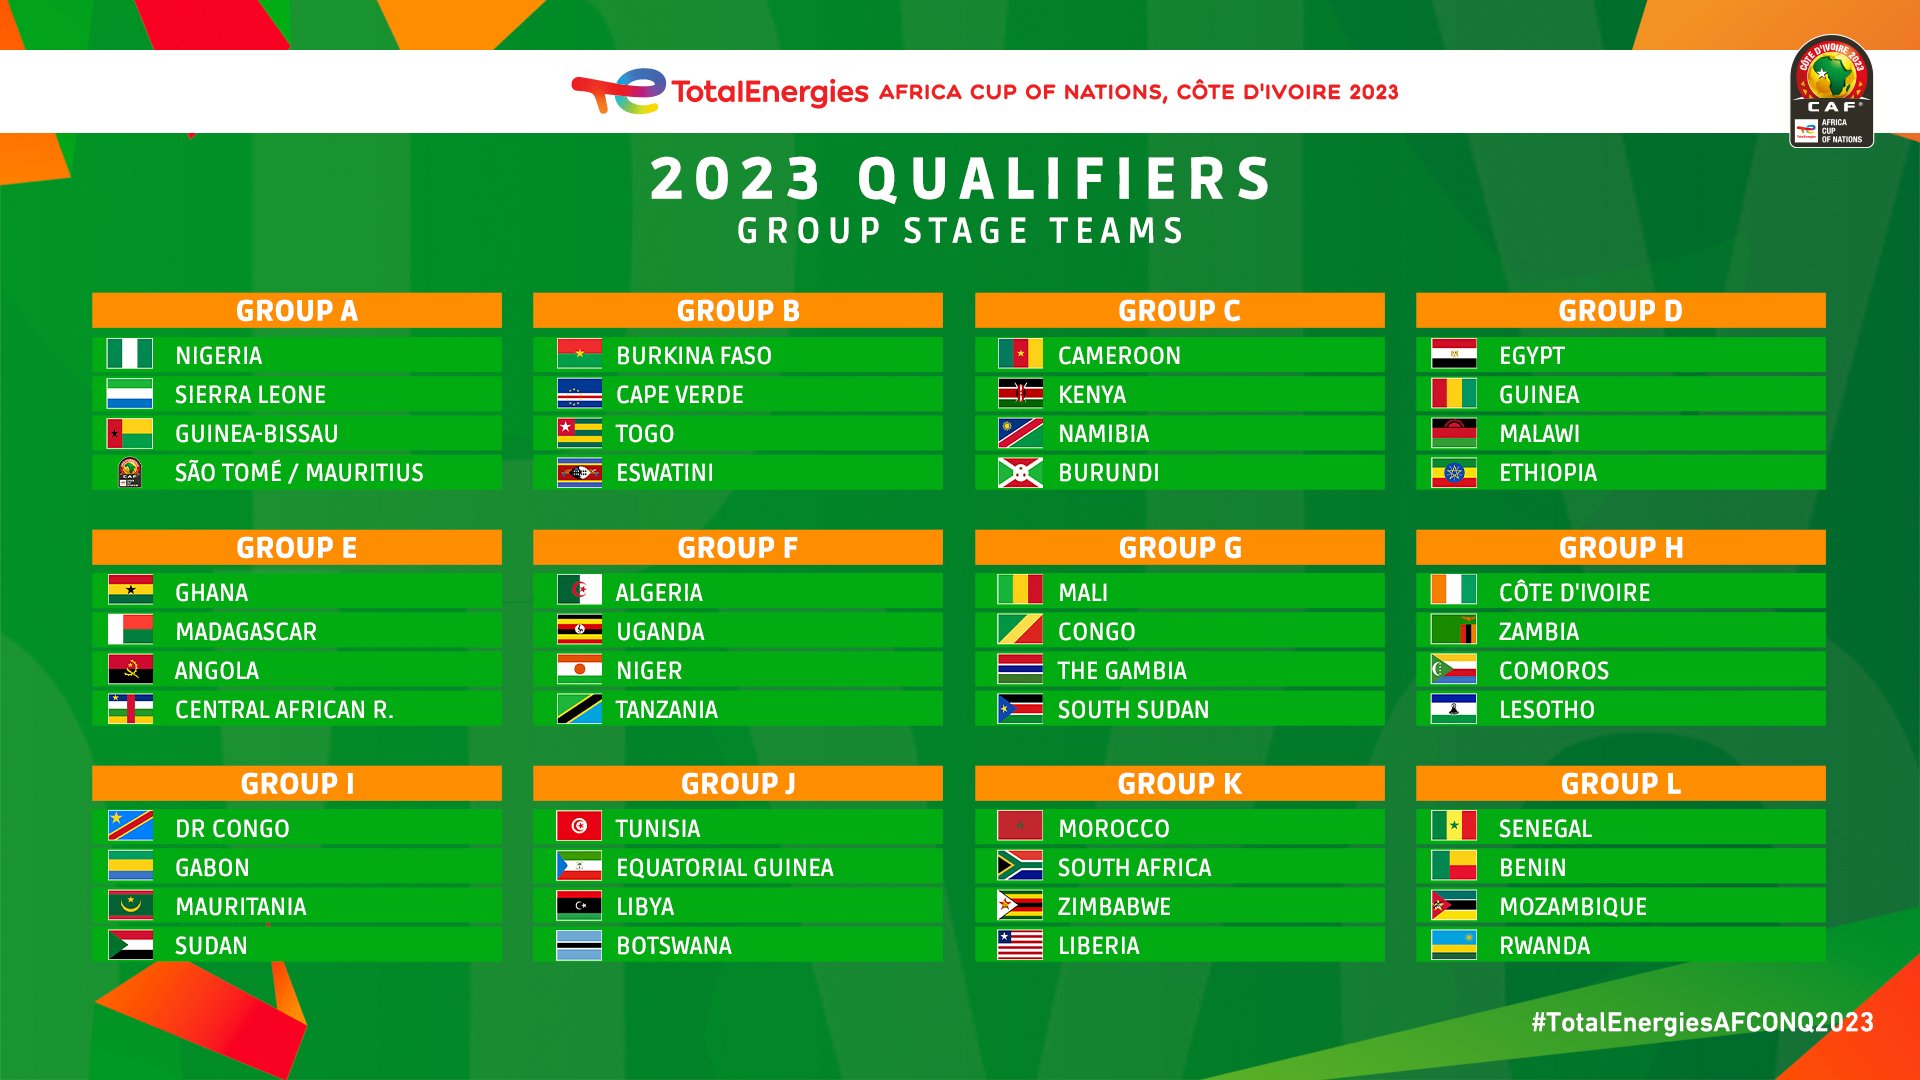 AFCON 2023 Qualifiers Ghana drawn against Madagascar, Angola and CAR